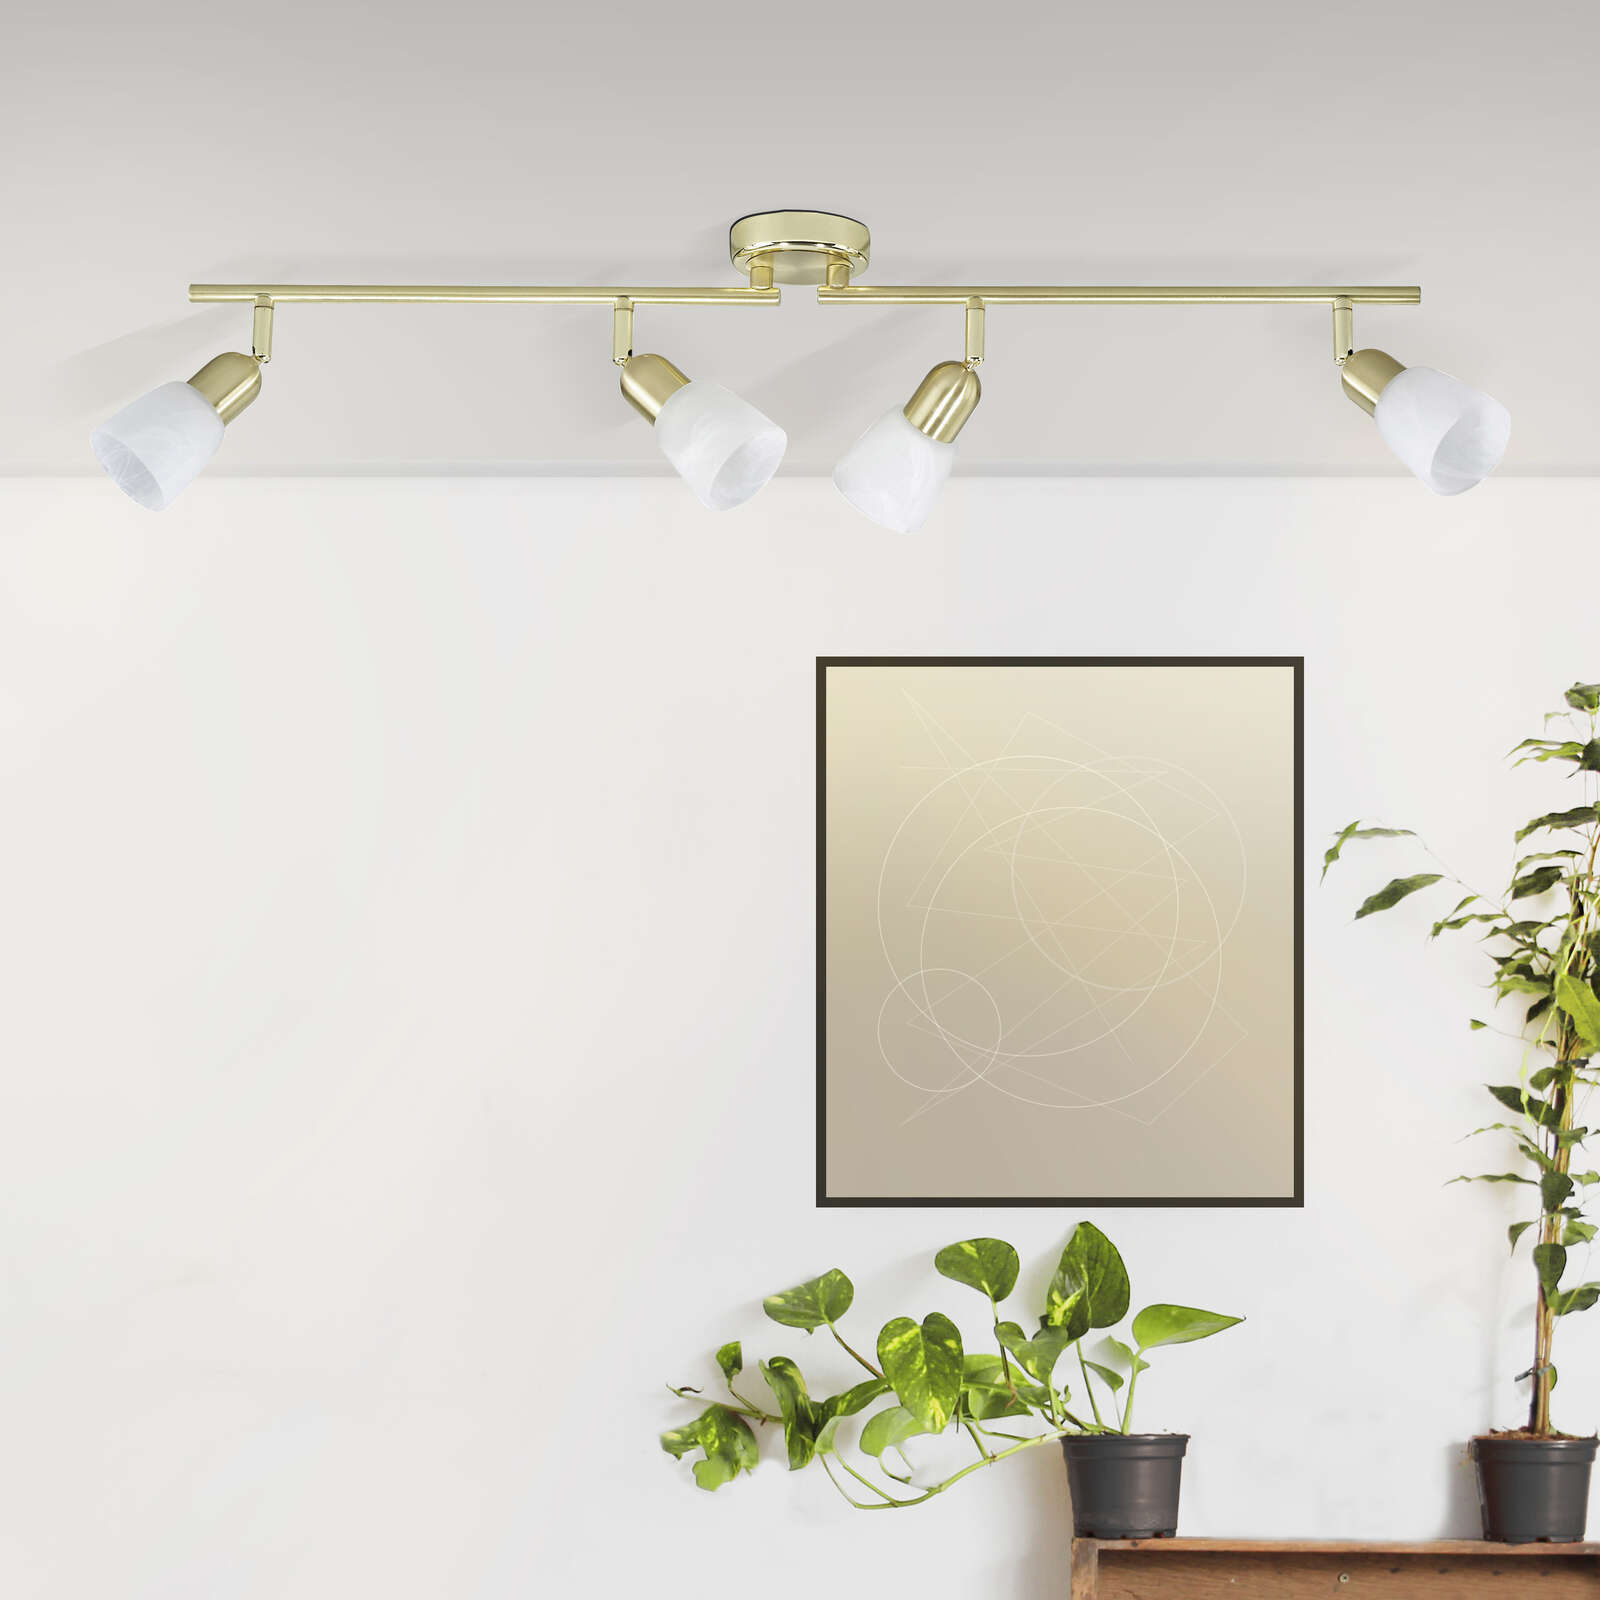             Metal ceiling light - Noemi 1 - Gold
        